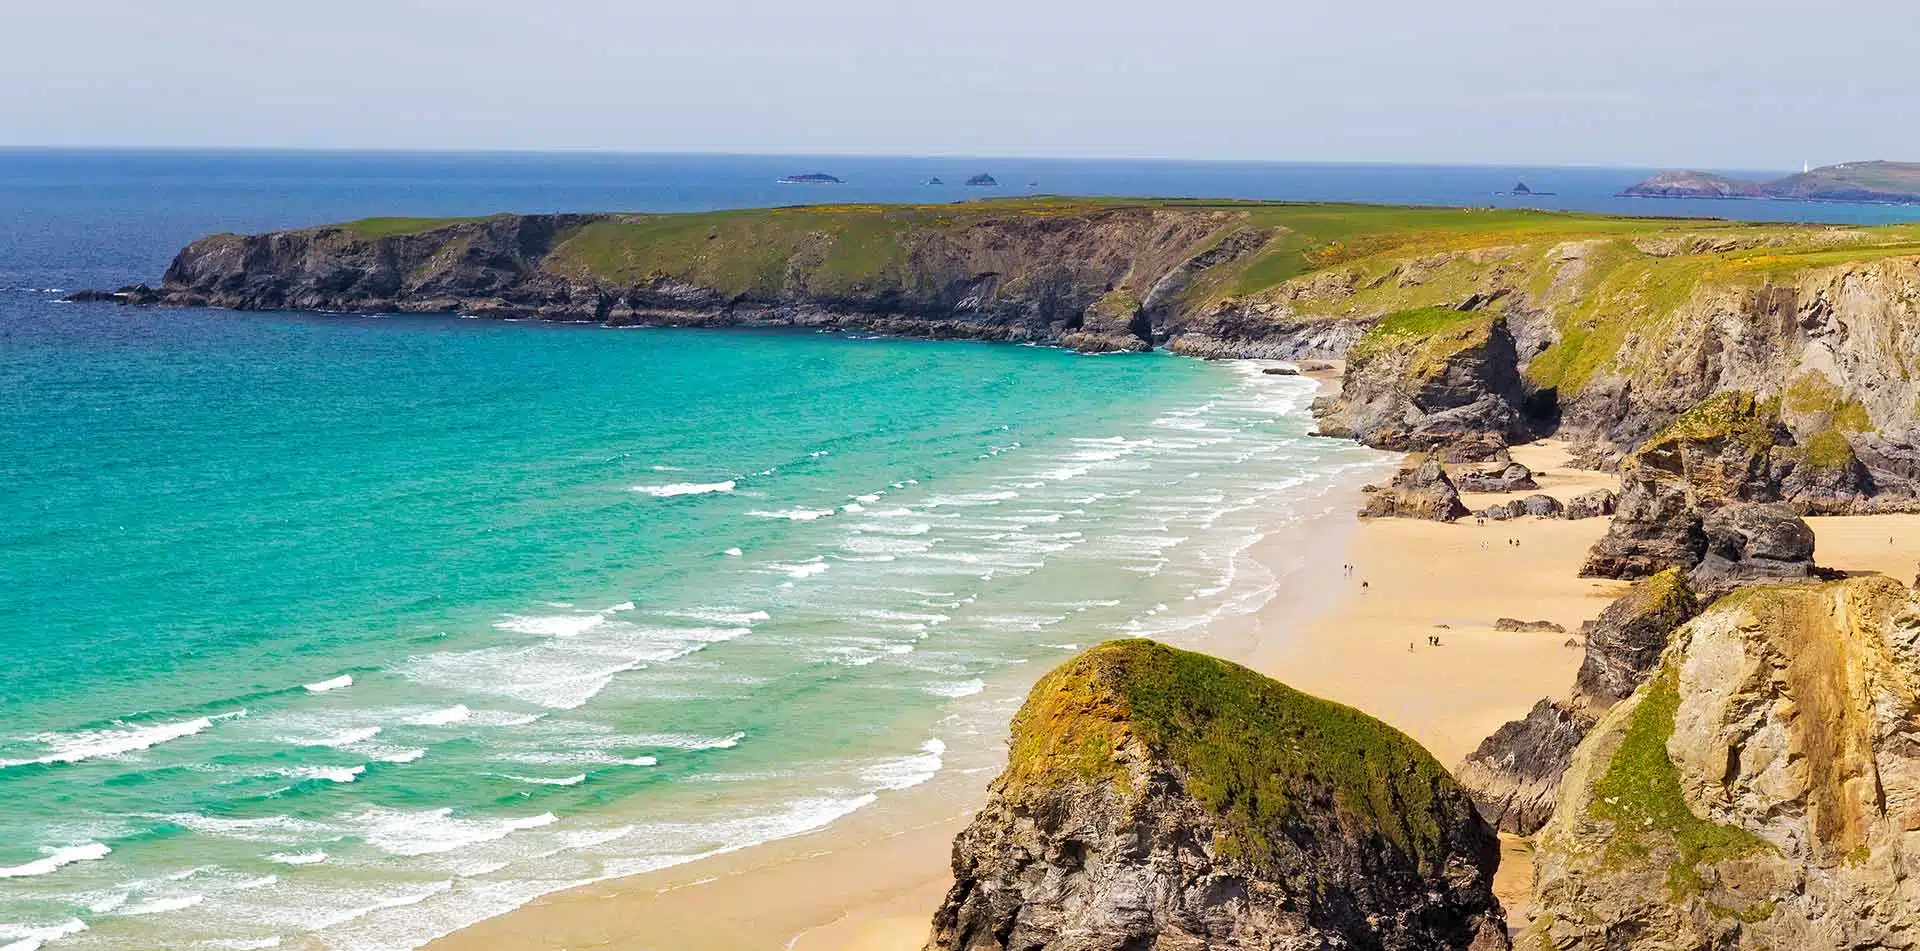 Cornish coastal scenery